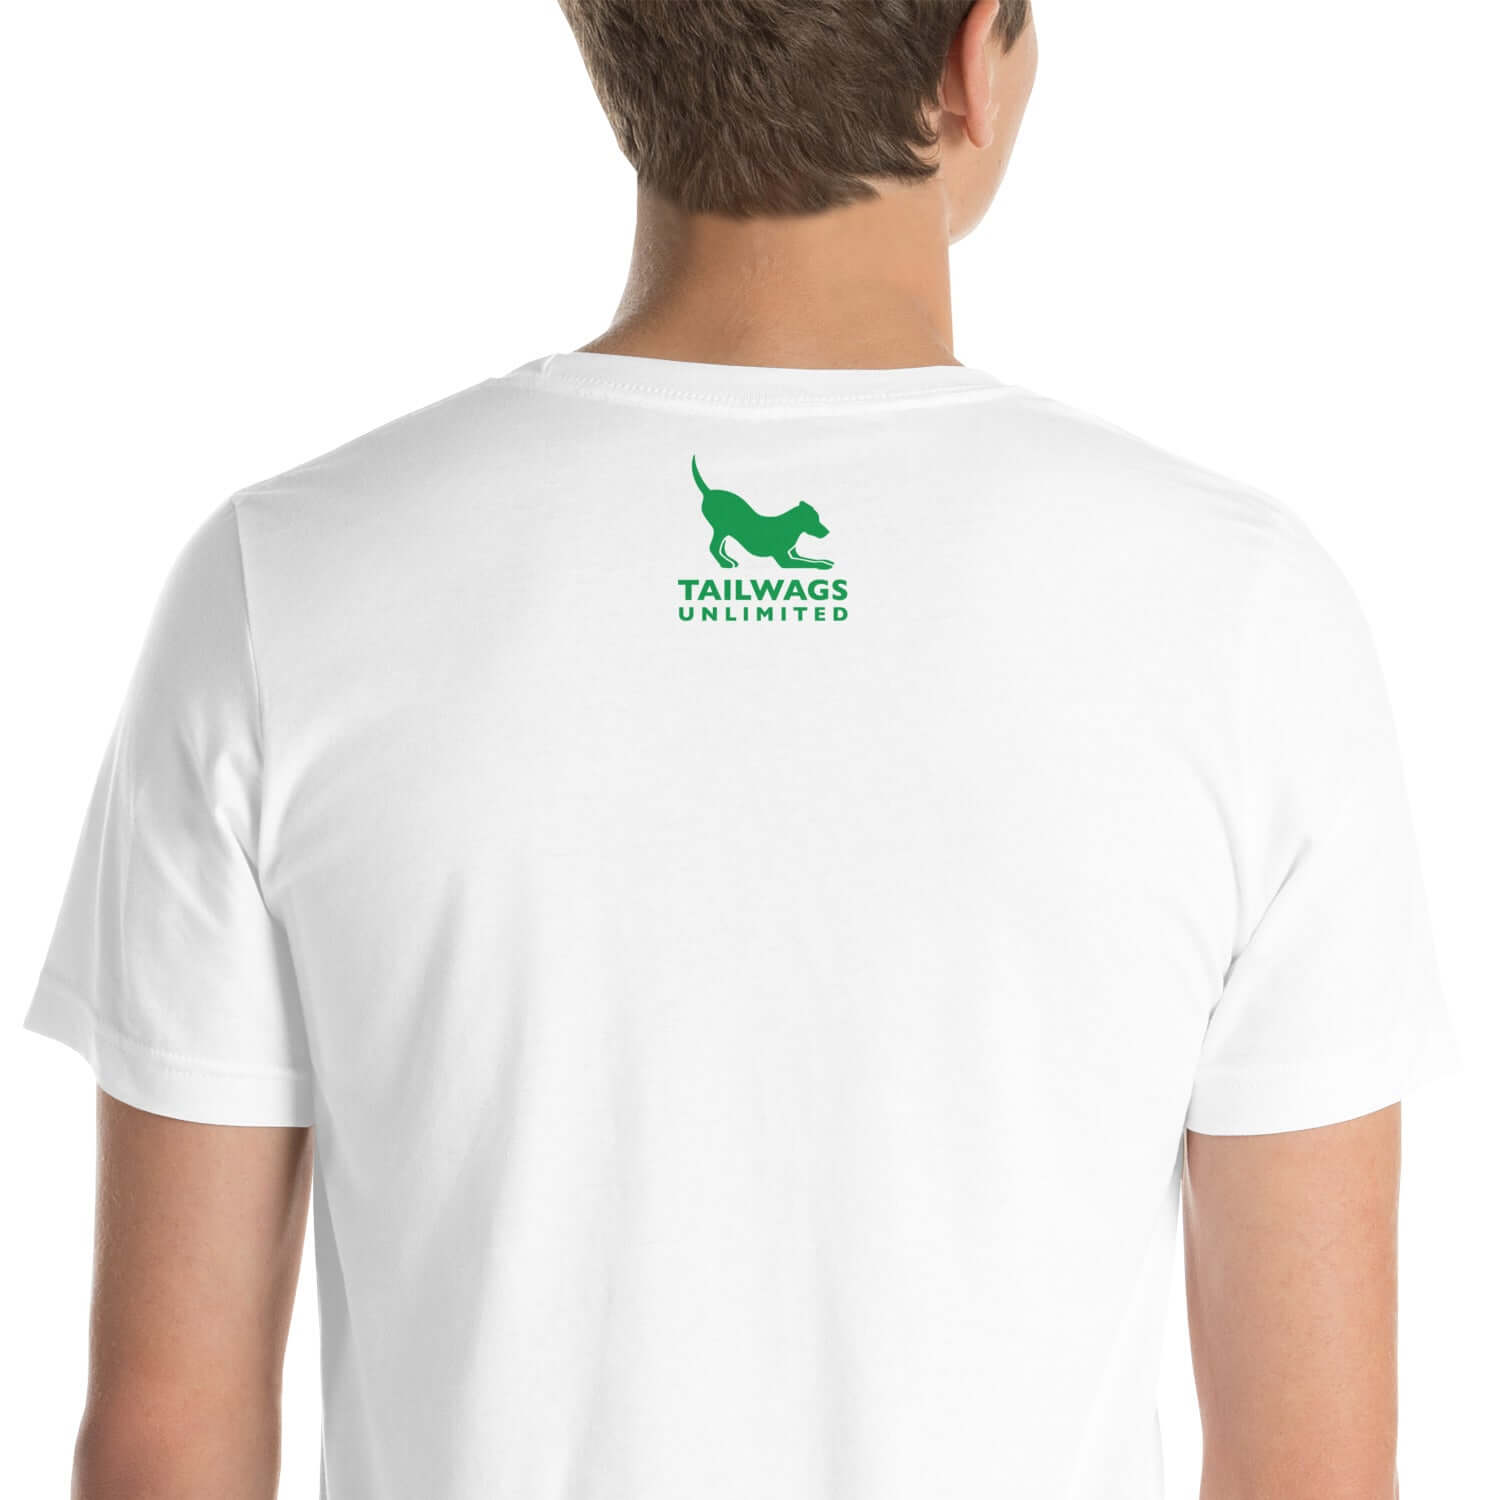 Irish Wolfhound T-Shirt - TAILWAGS UNLIMITED